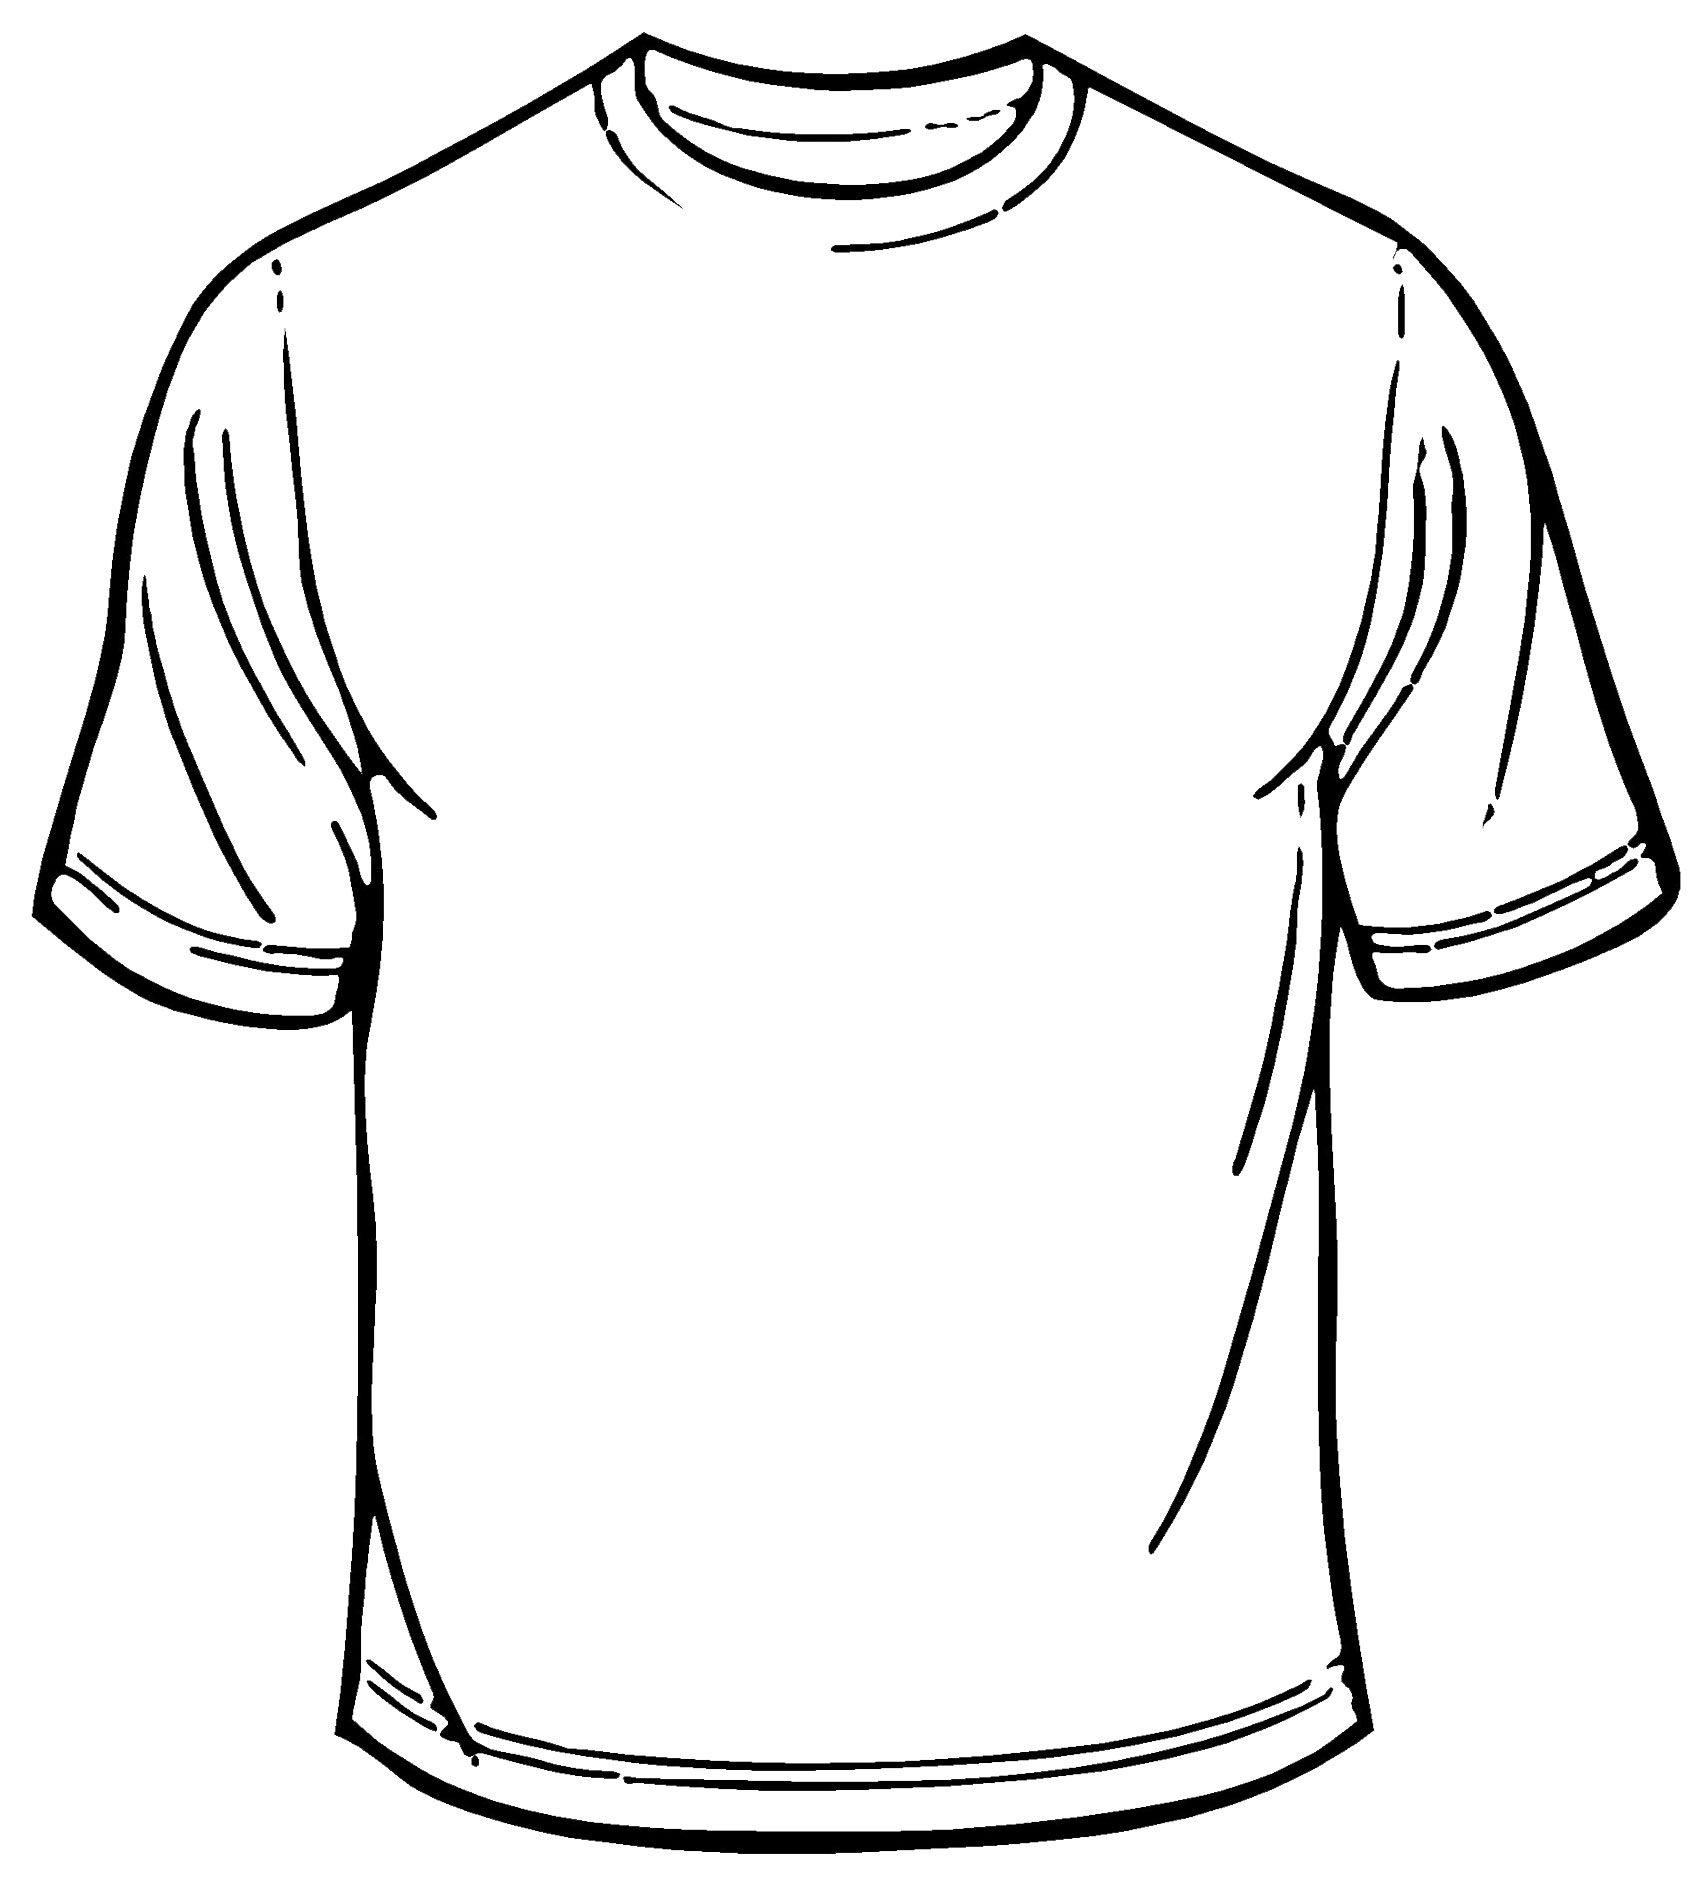 Blank TShirt Templates for Custom Designs  Design Your Own TShirt